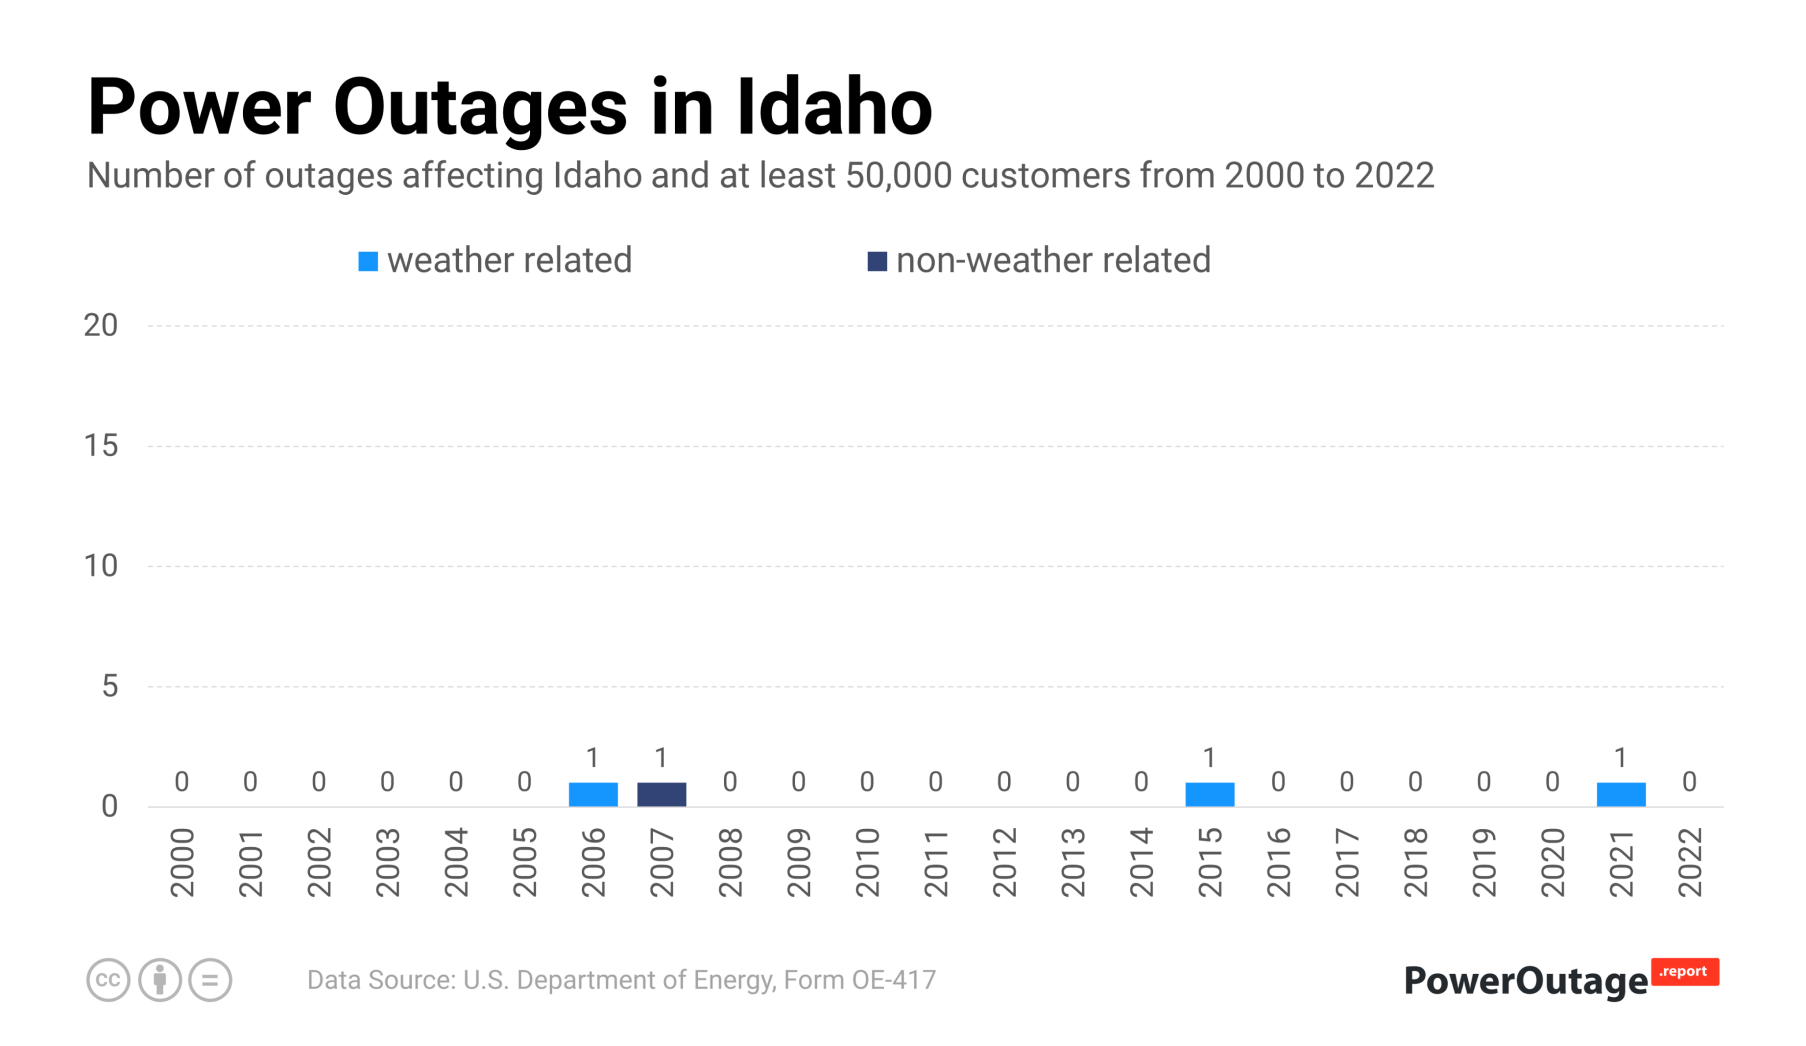 Idaho Power Outage Statistics (2000 - 2022)